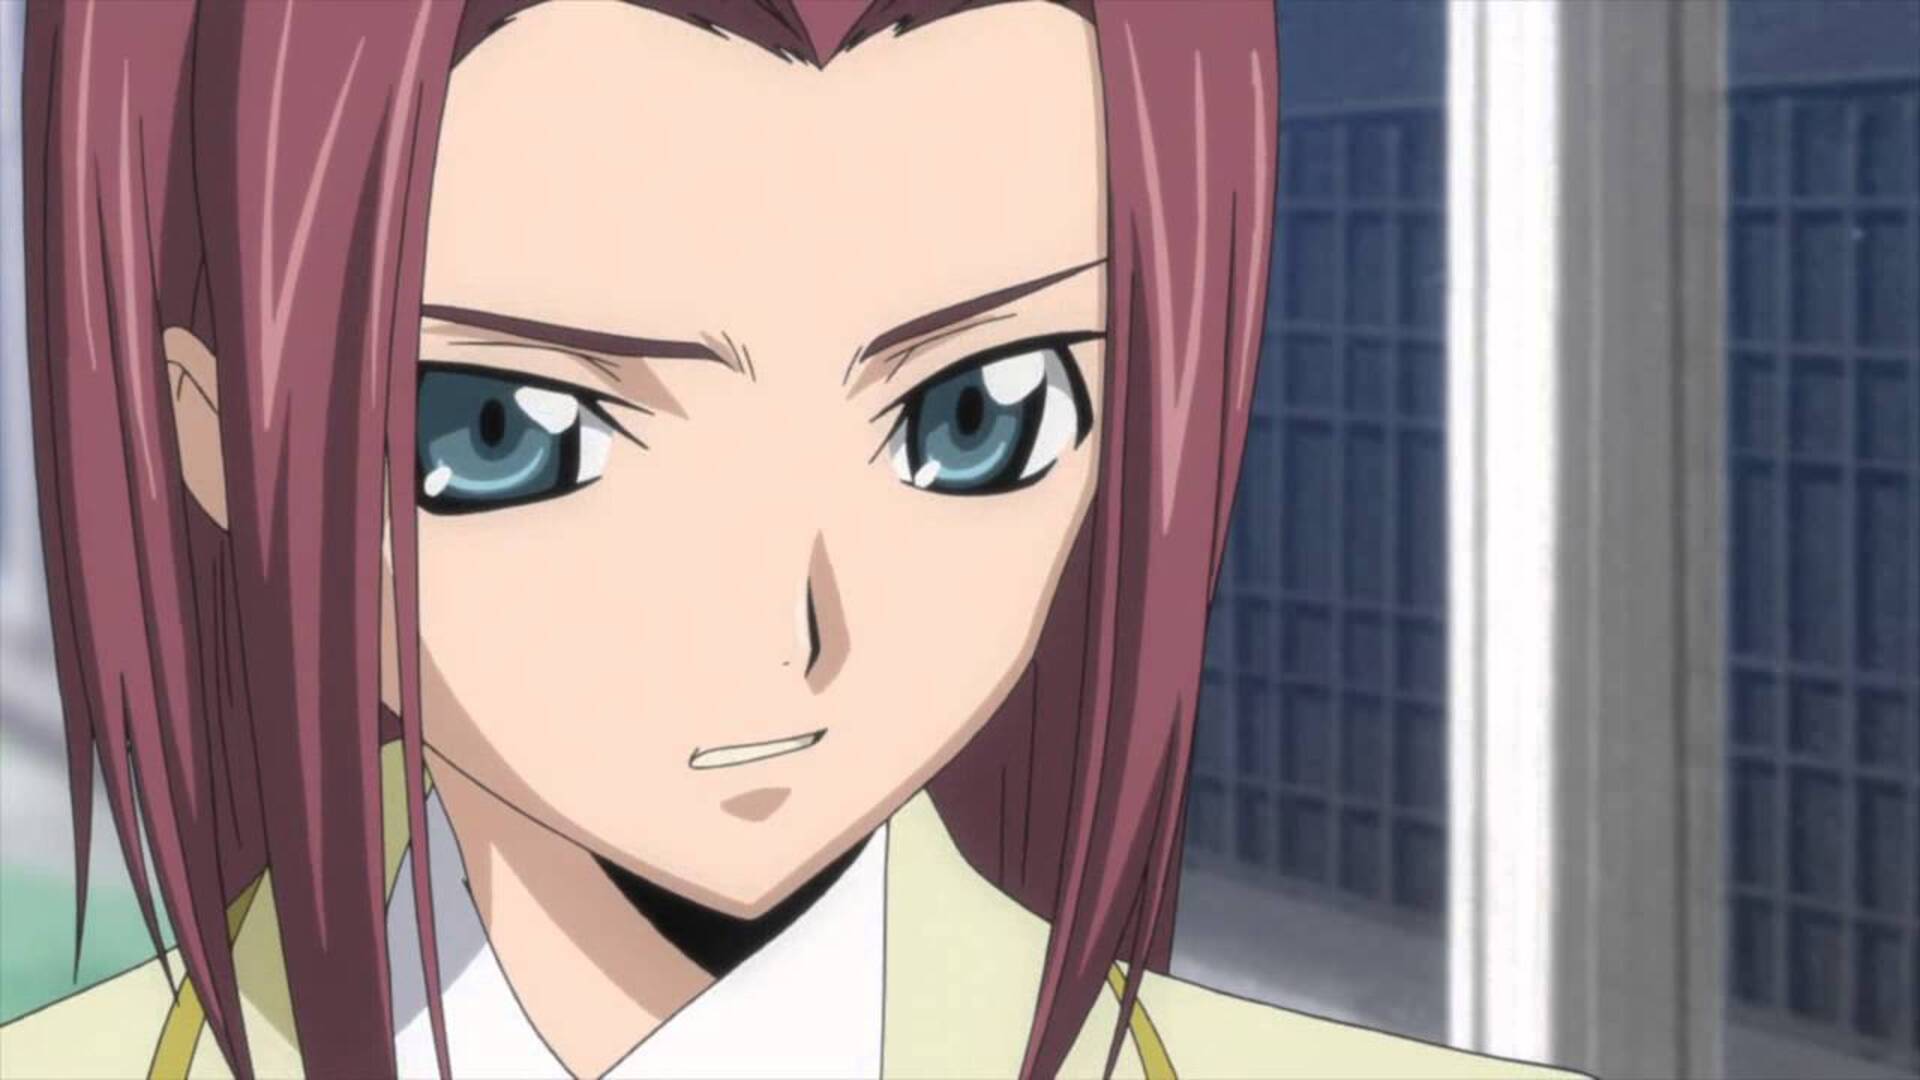 Anime 1920x1080 anime anime girls Kallen Stadtfeld Code Geass short hair redhead artwork digital art anime screenshot